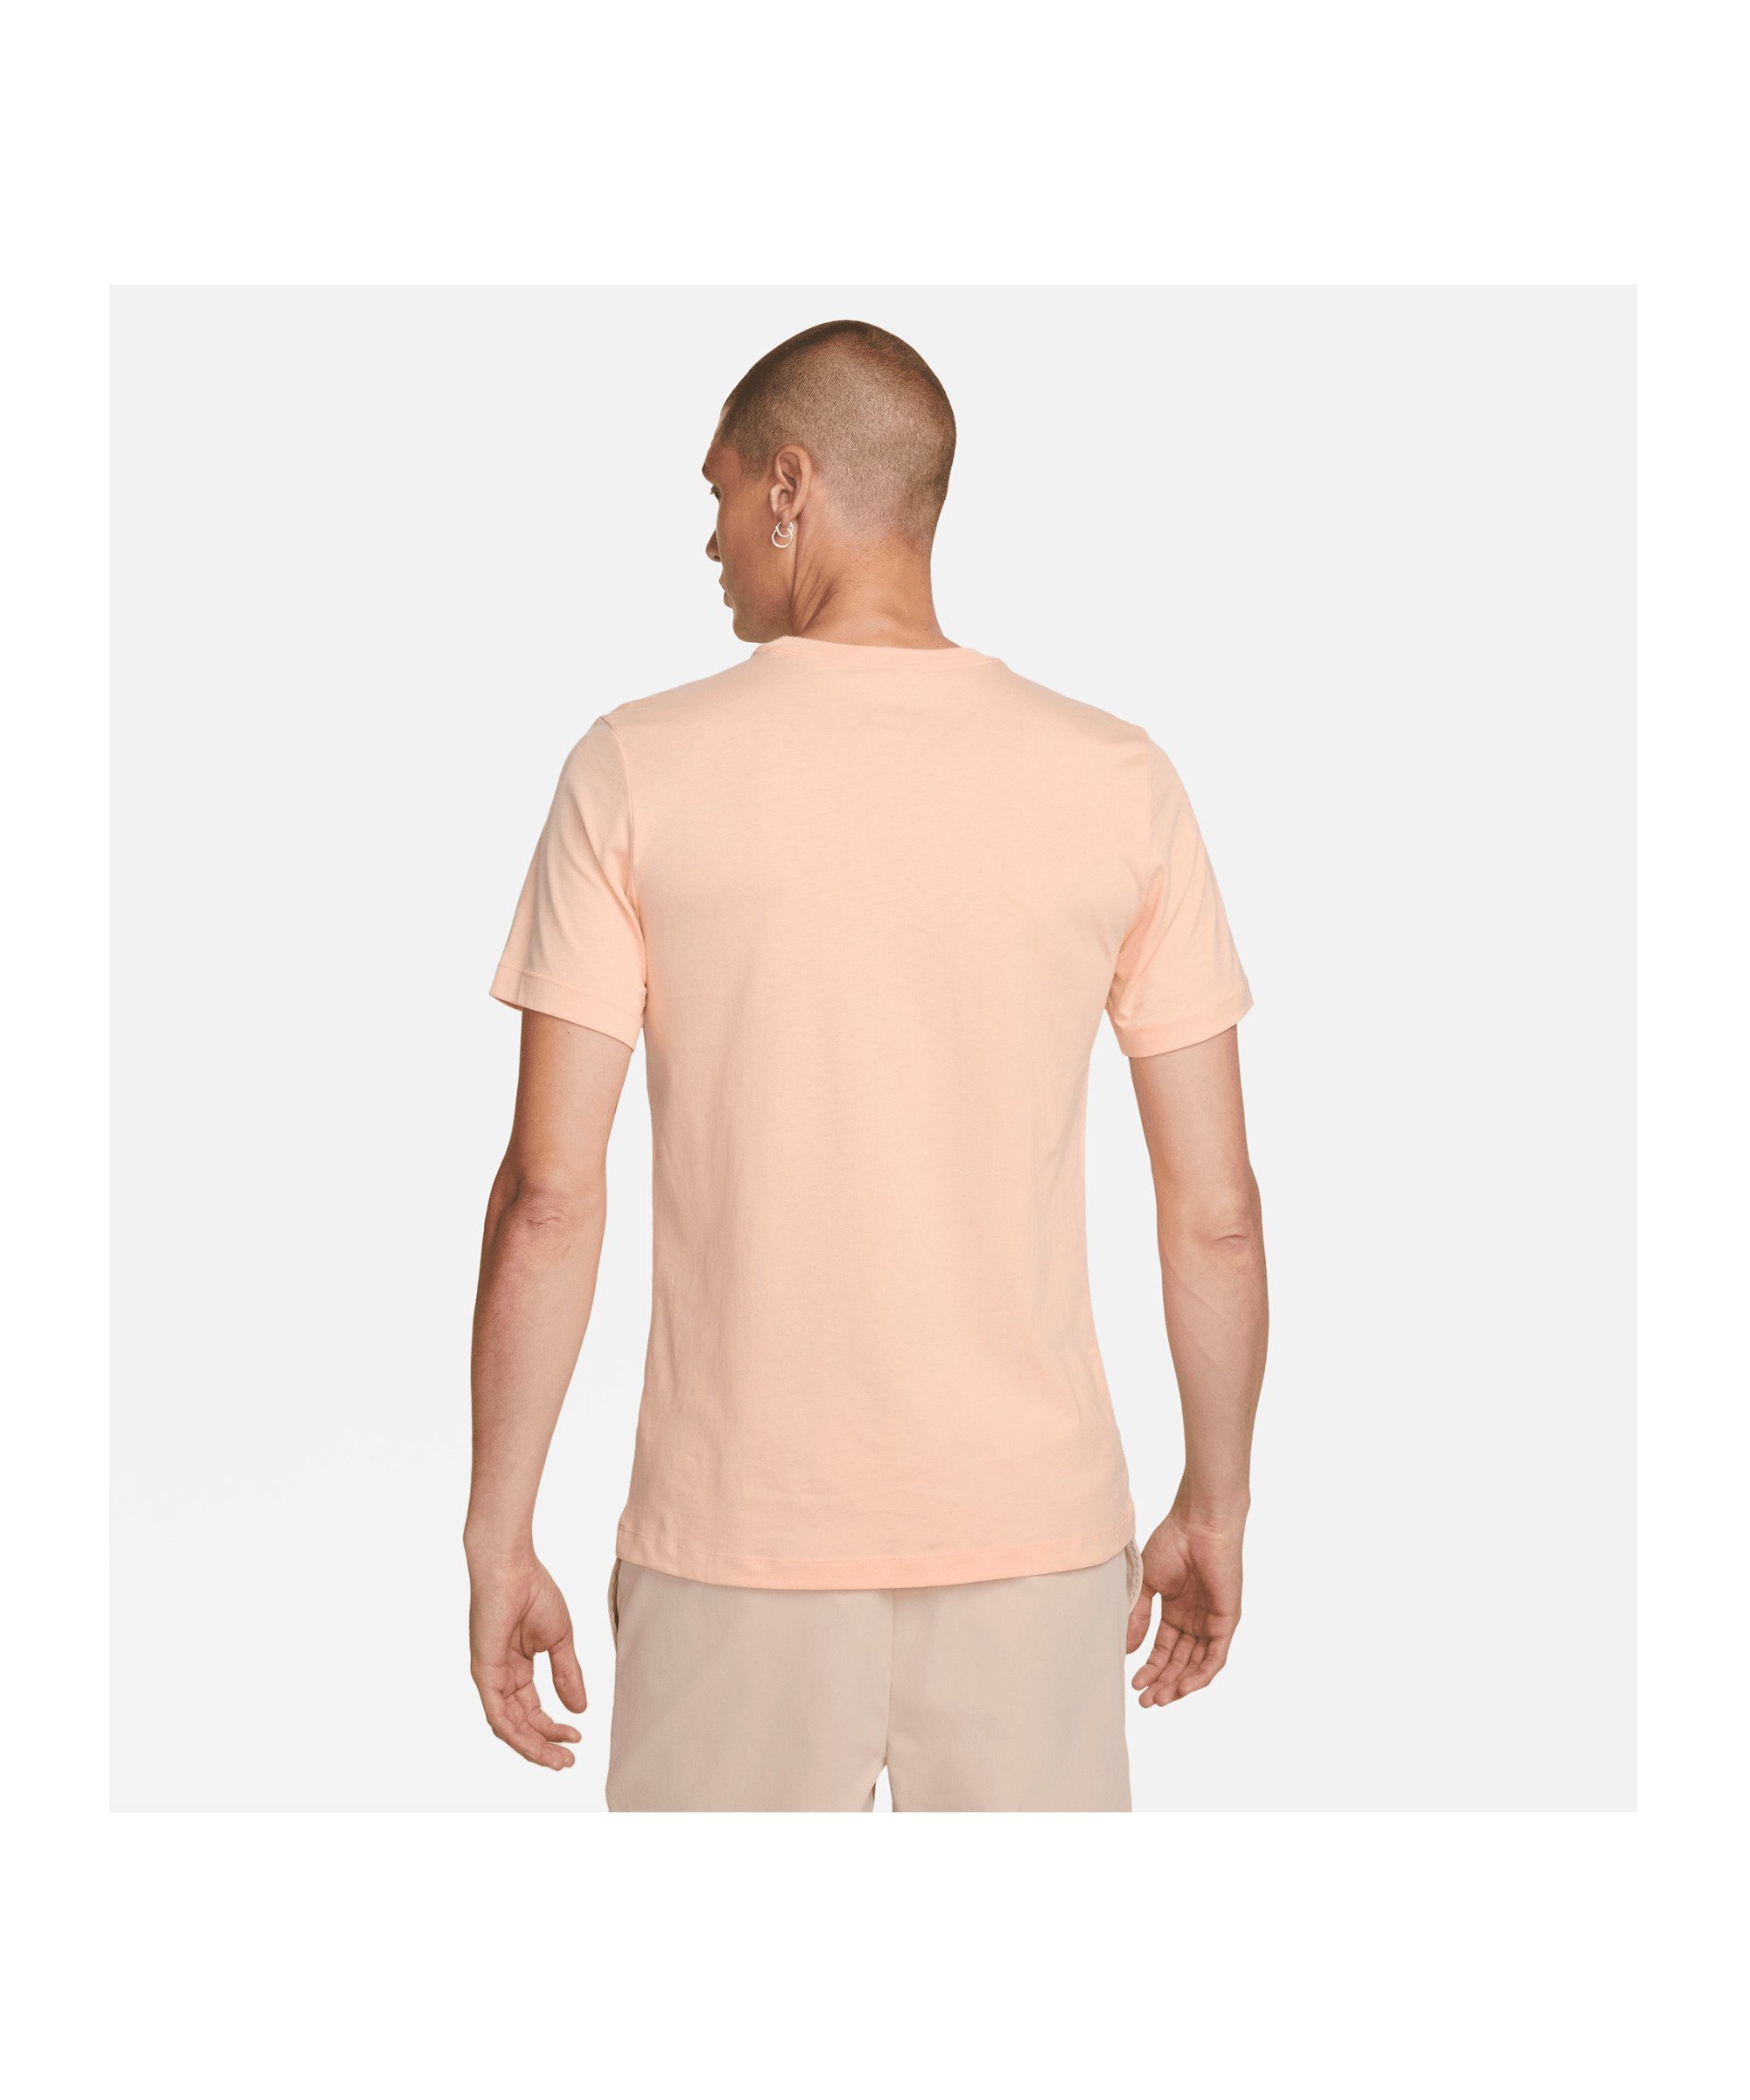 Nike Sportswear T-Shirt orange default T-Shirt